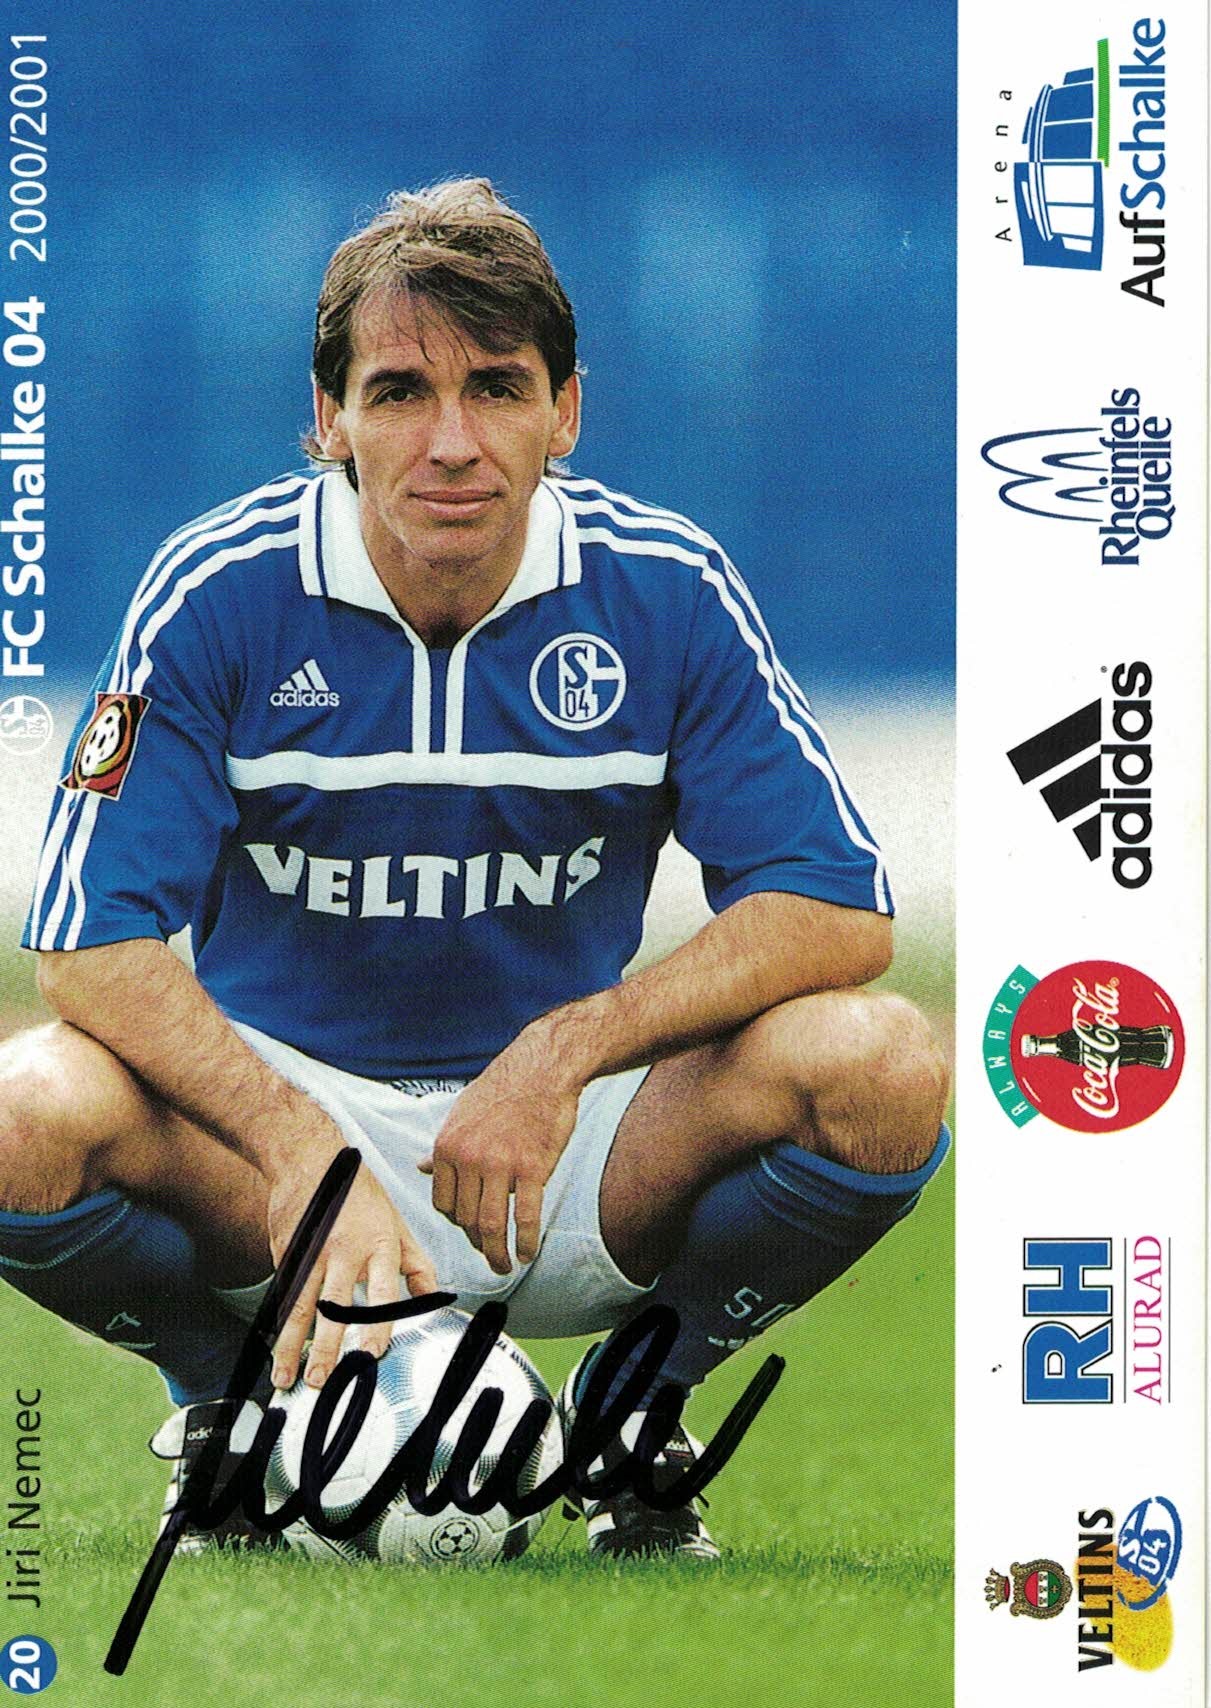 Jiri Nemec Schalke 04 2000/01 Podpisova karta autogram